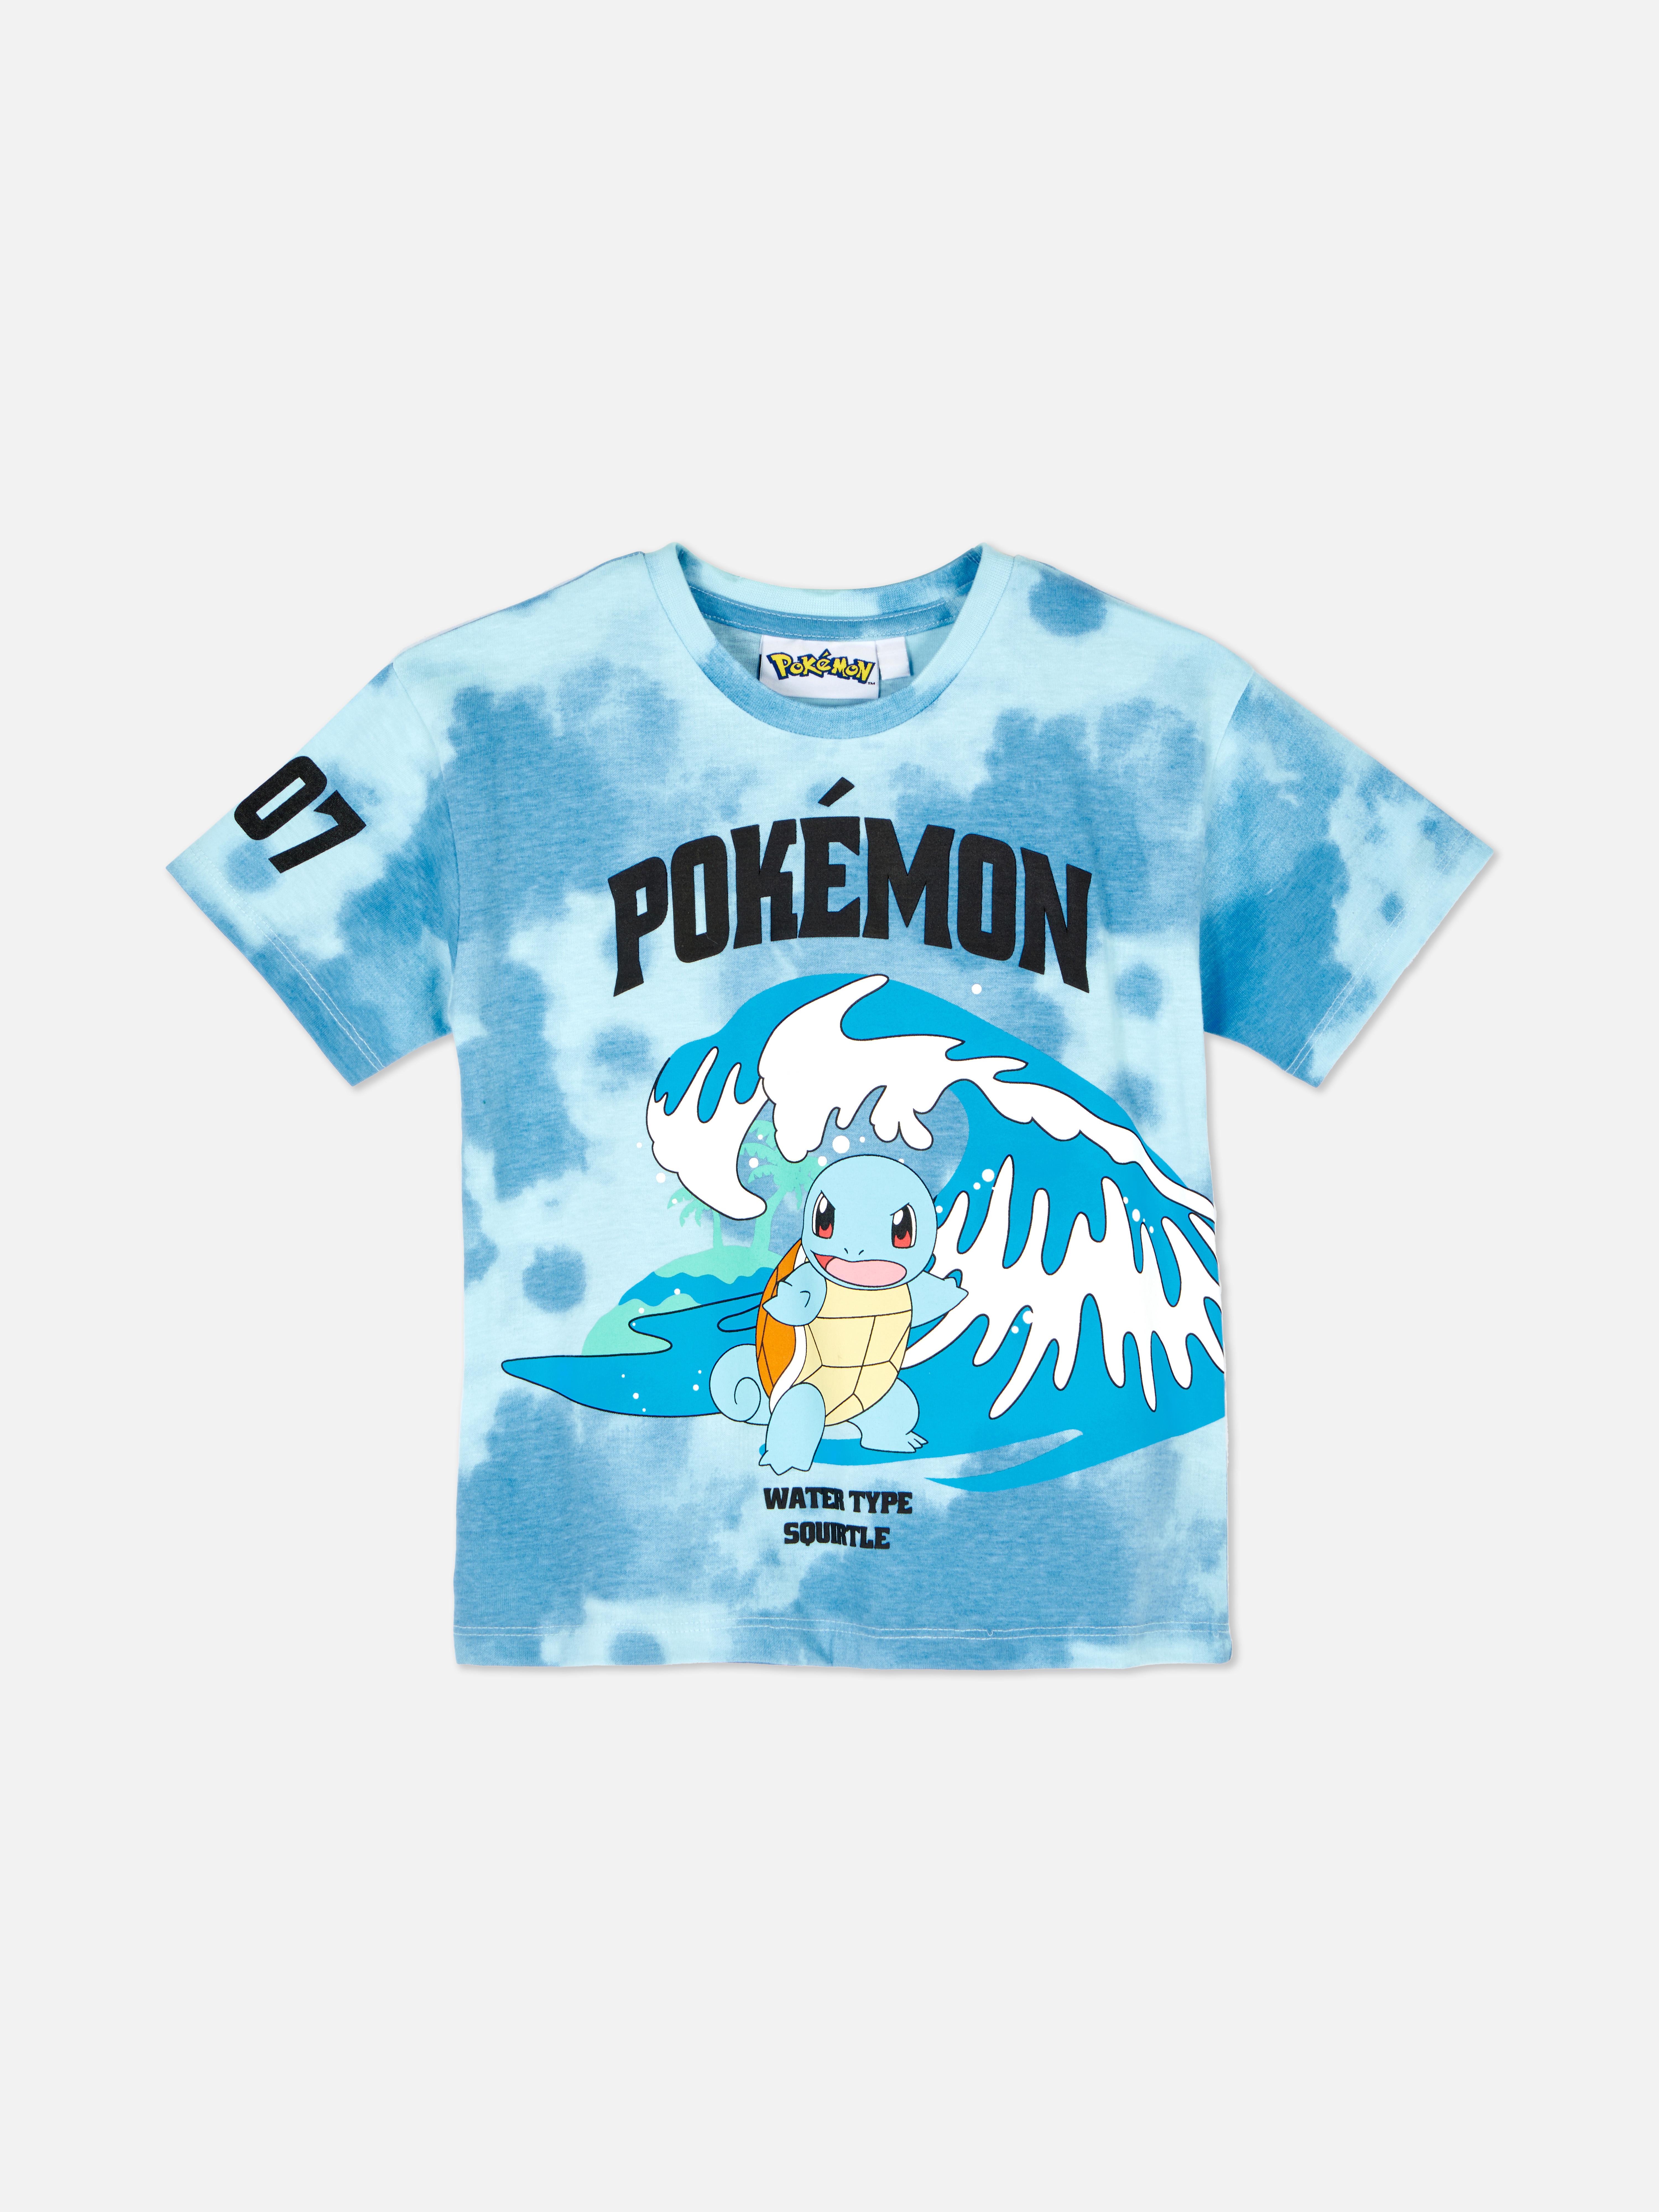 Pokémon Squirtle Tie-Dye Shirt